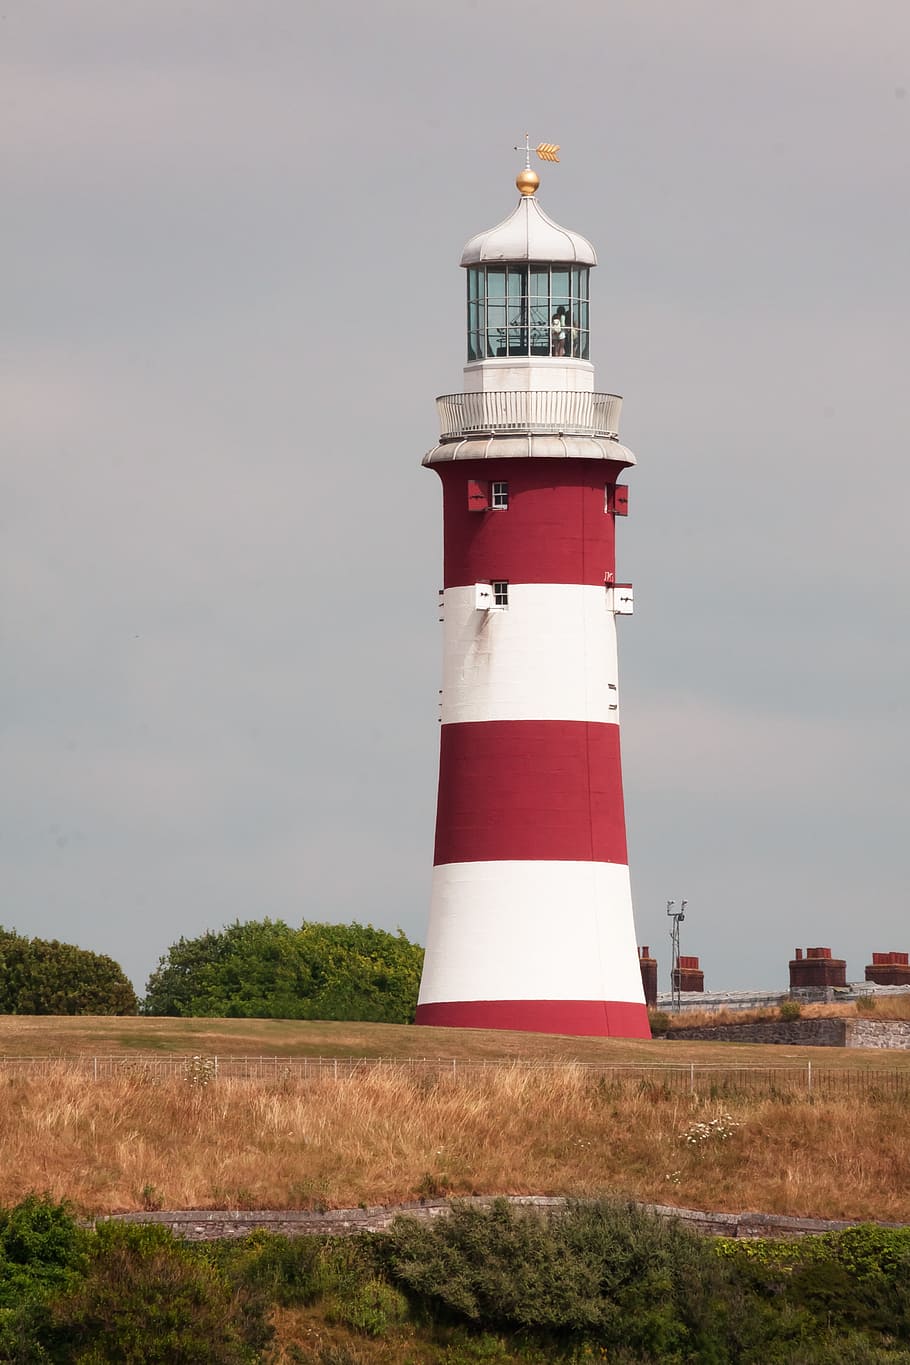 Lighthouse, White, Tower, Landscape, red, white, tower, landmark, building, nautical, england